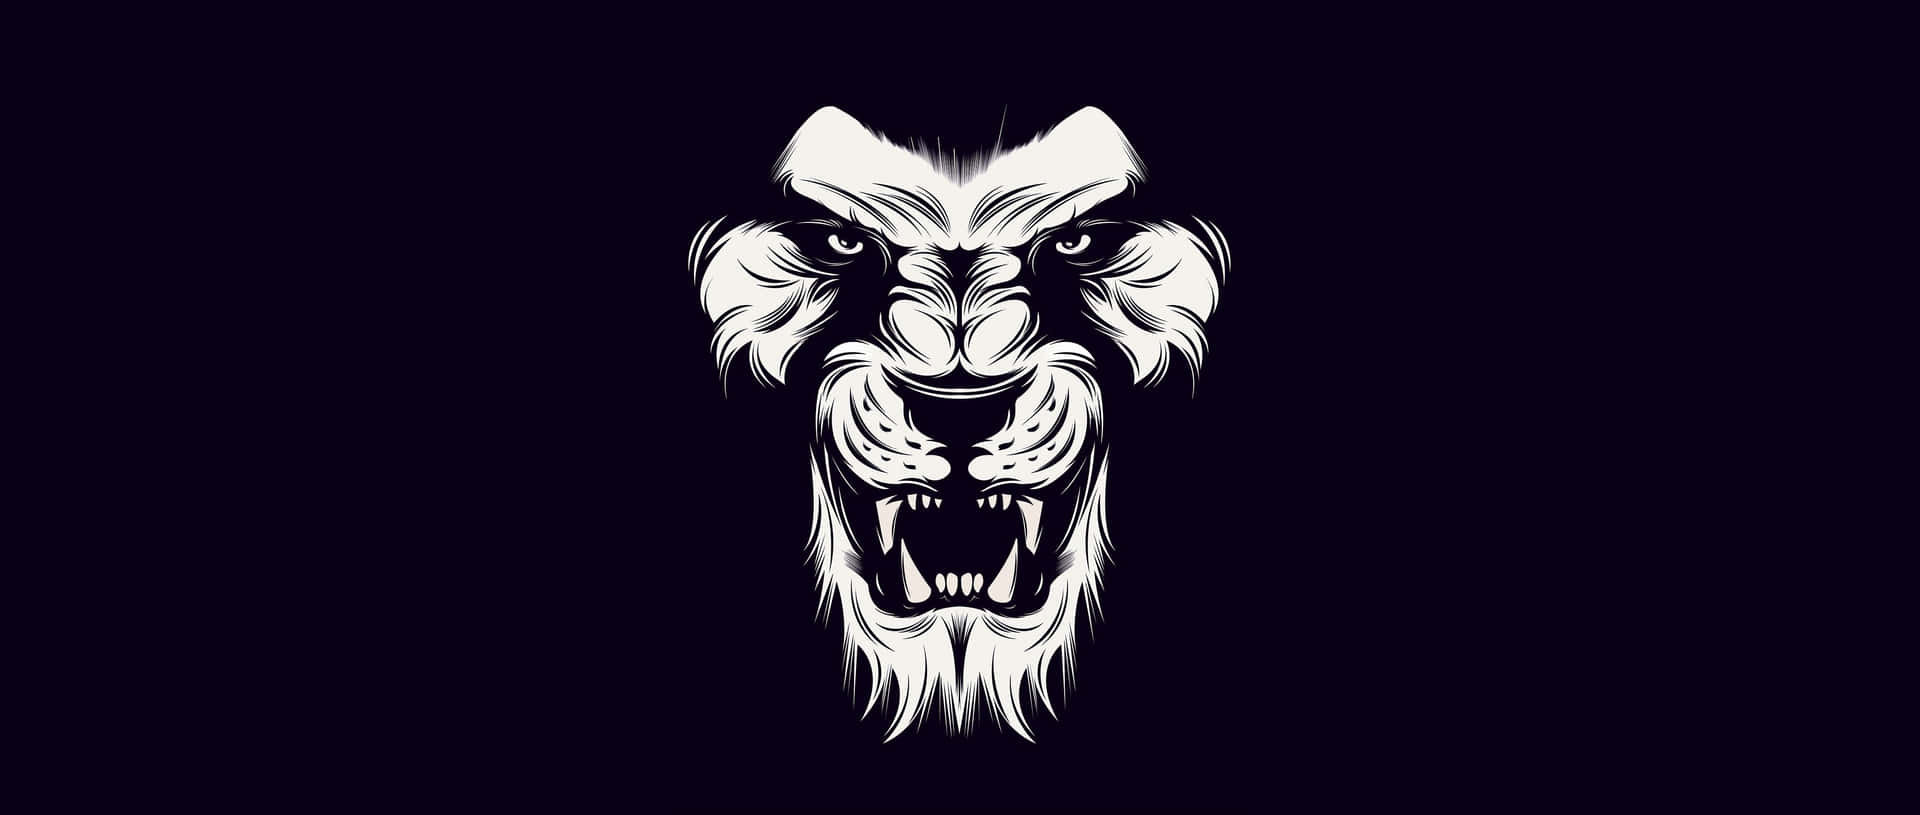 Black And White Lion Head Wallpaper